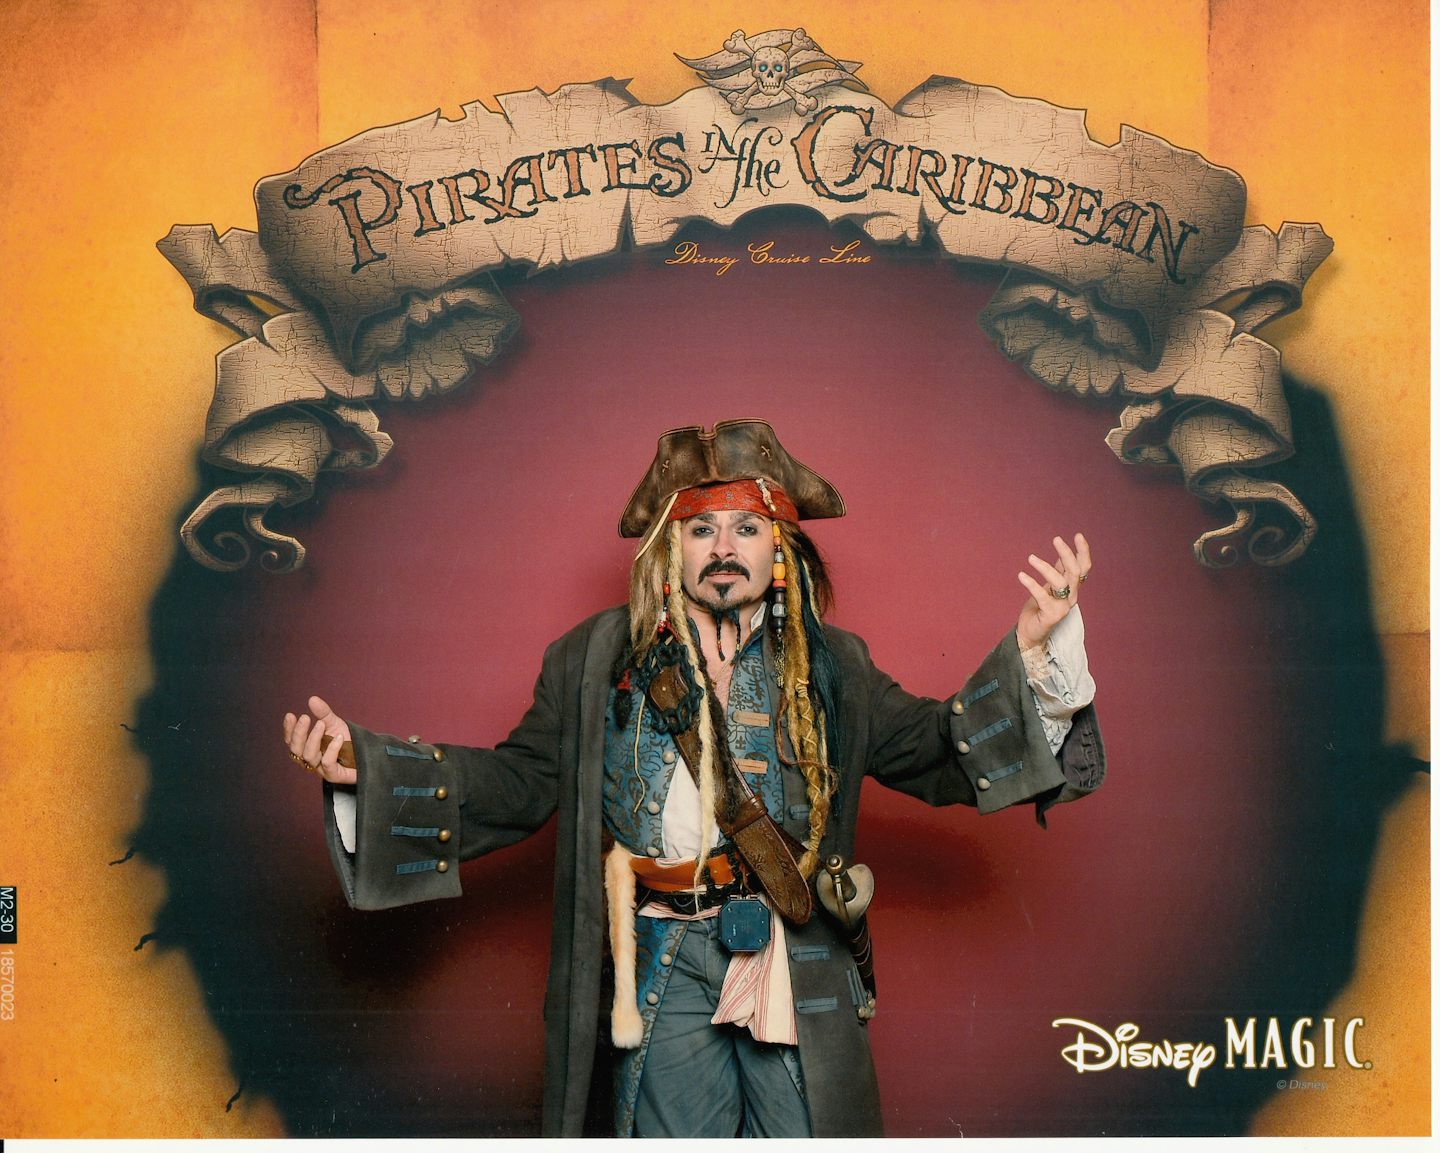 Doing photo dressed as jack sparrow on pirate night Disney magic